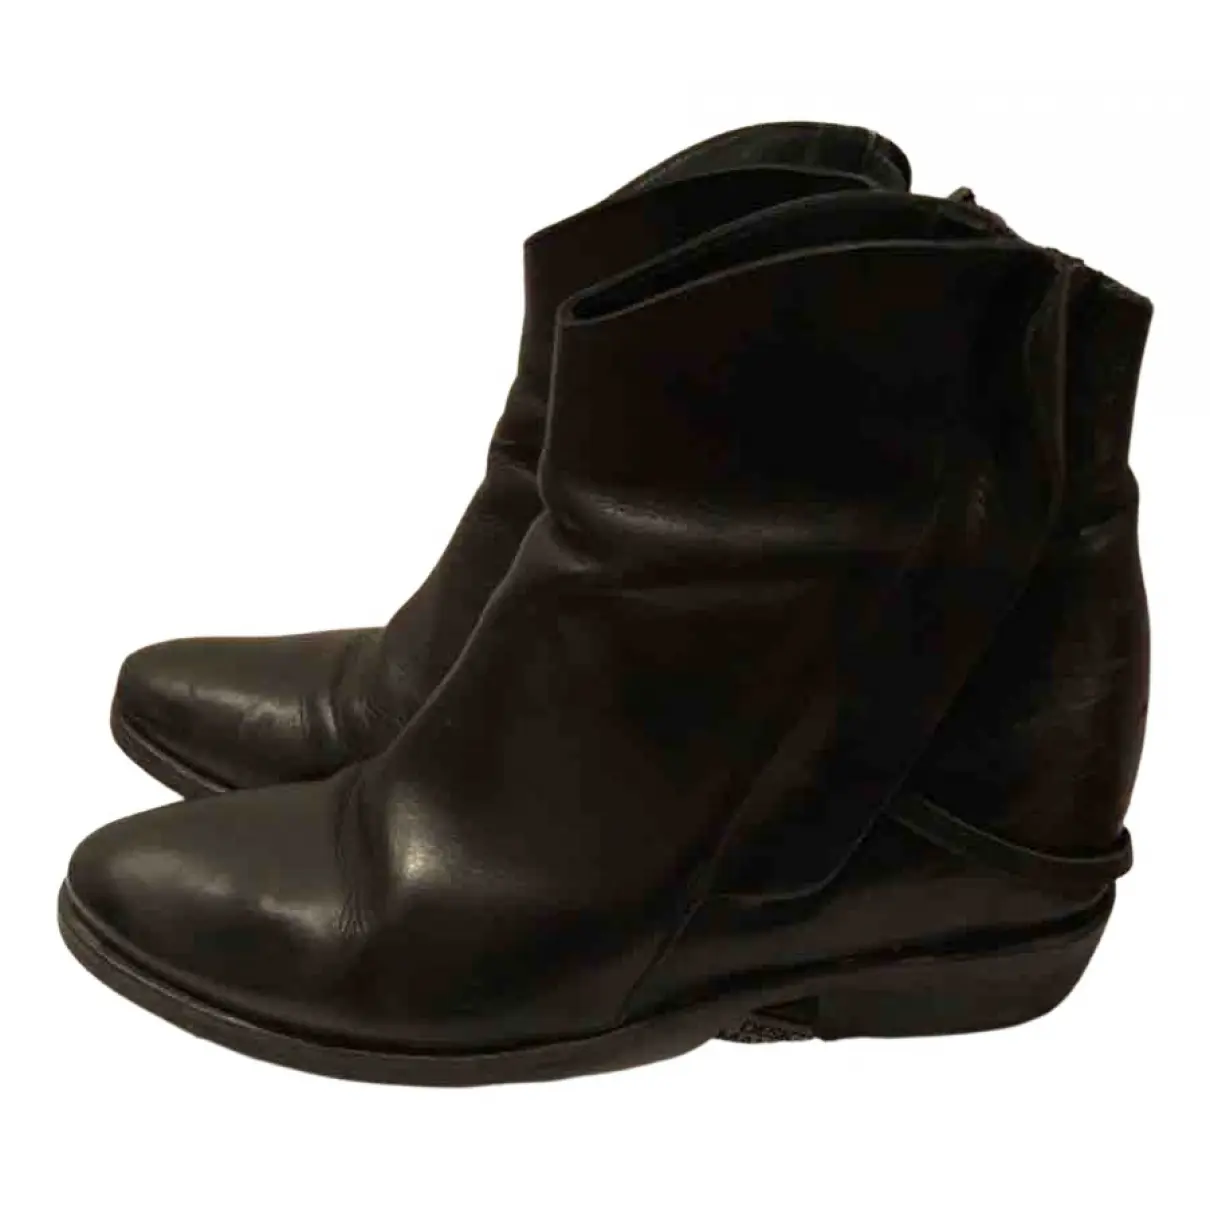 Leather ankle boots Cinzia Araia